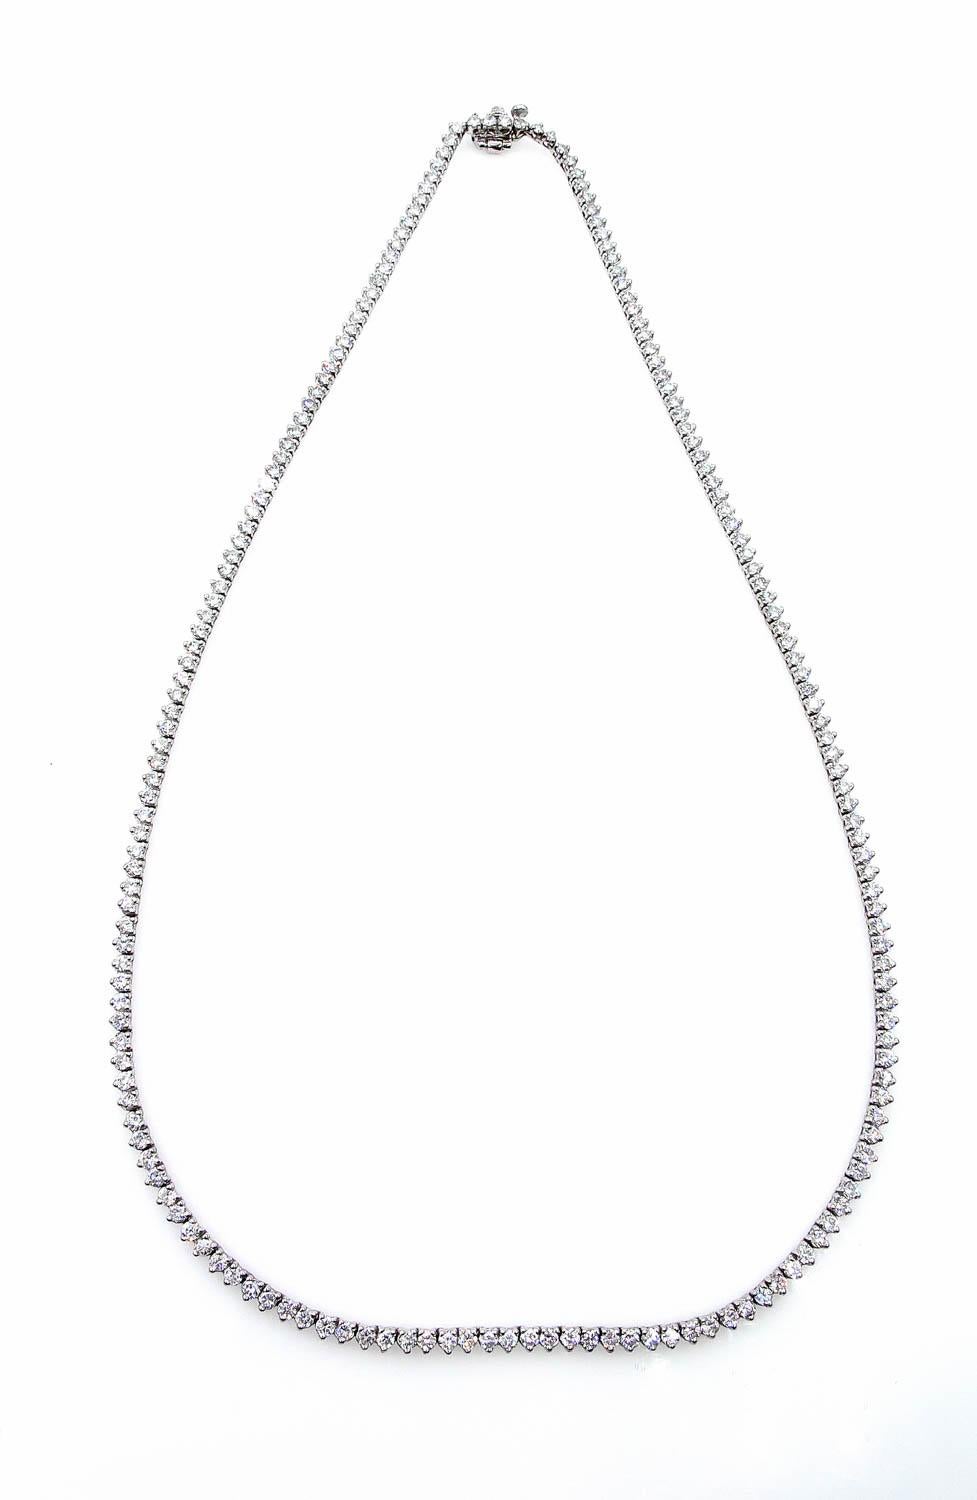 7.50 Carat Round Diamond Tennis Necklace in White Gold 2